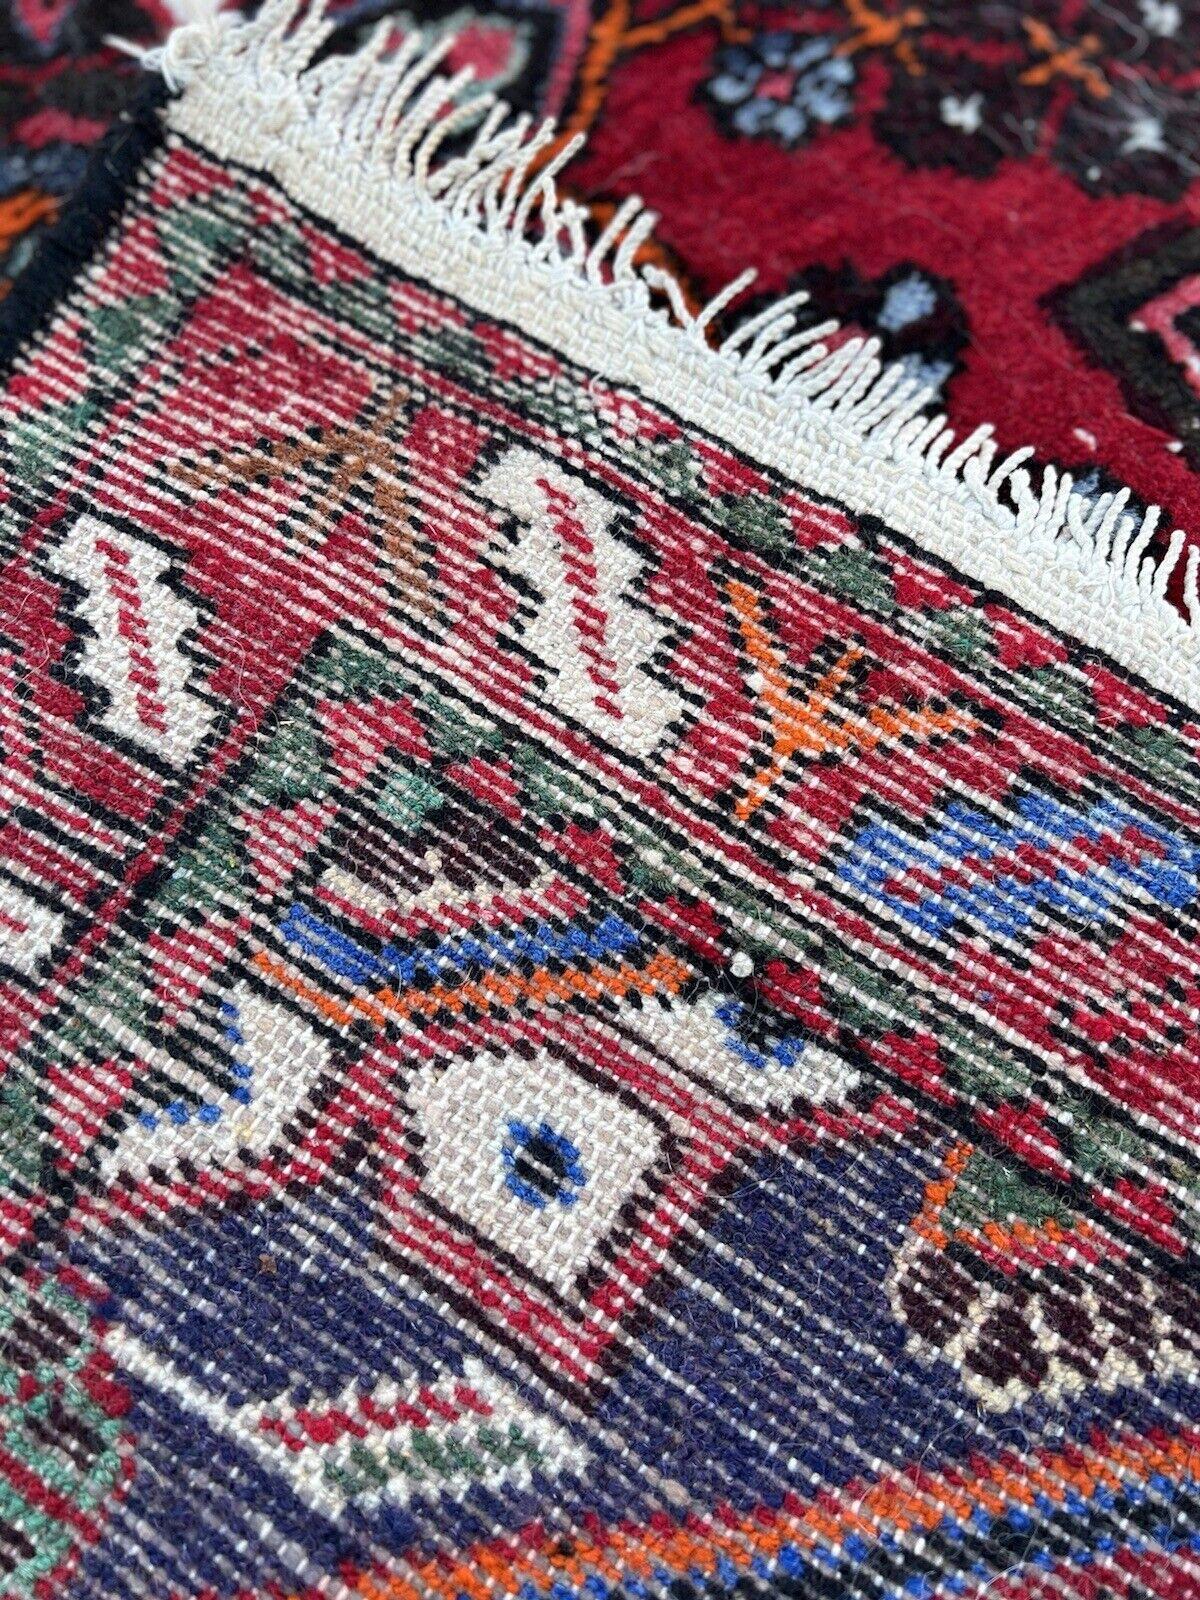 Wool Handmade Vintage Persian Style Hamadan Rug 3.4' x 5.2', 1970s - 1S65 For Sale